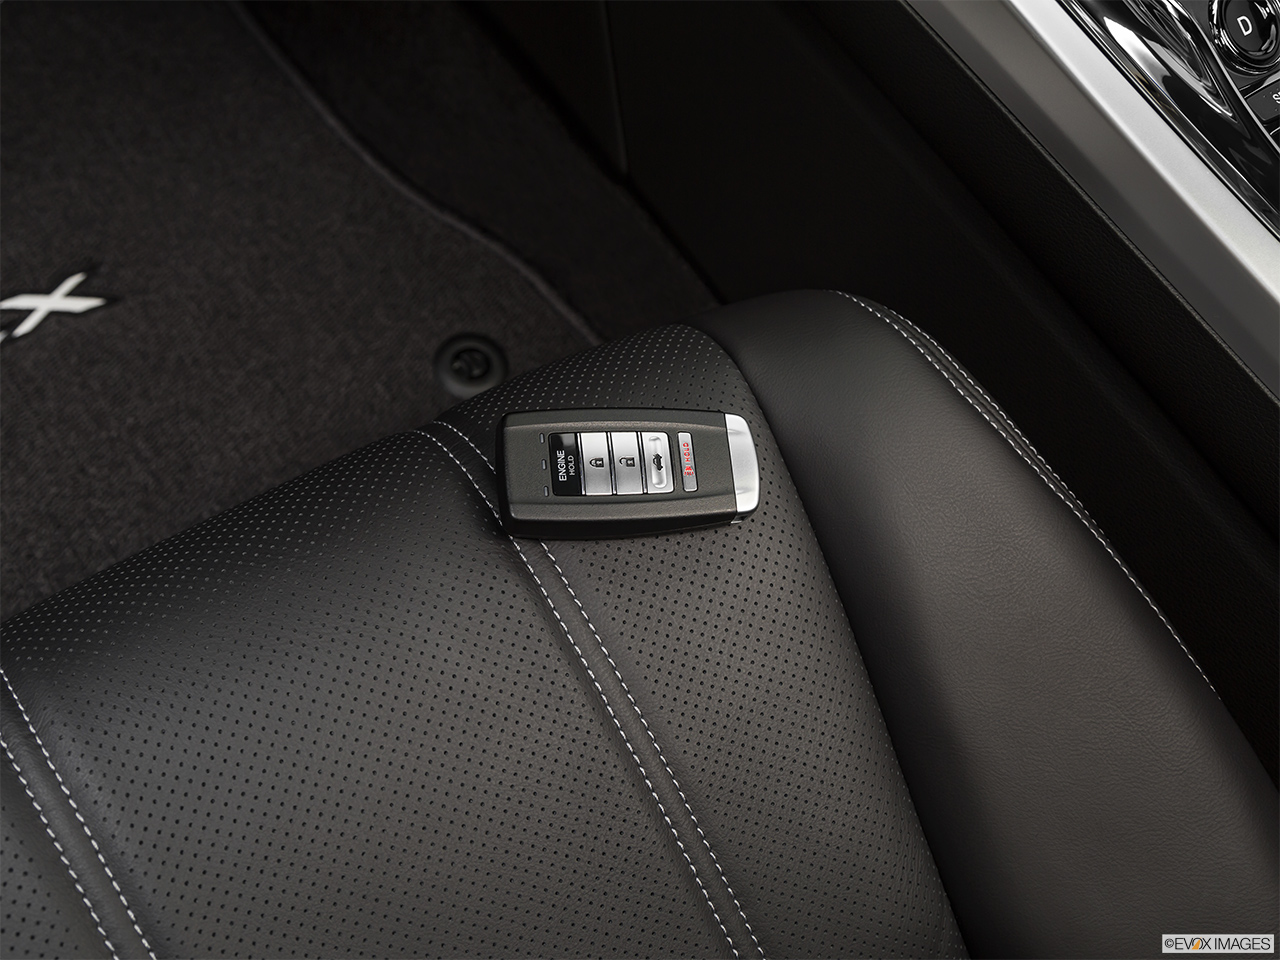 2020 Acura RLX Sport Hybrid SH-AWD Key fob on driver's seat. 